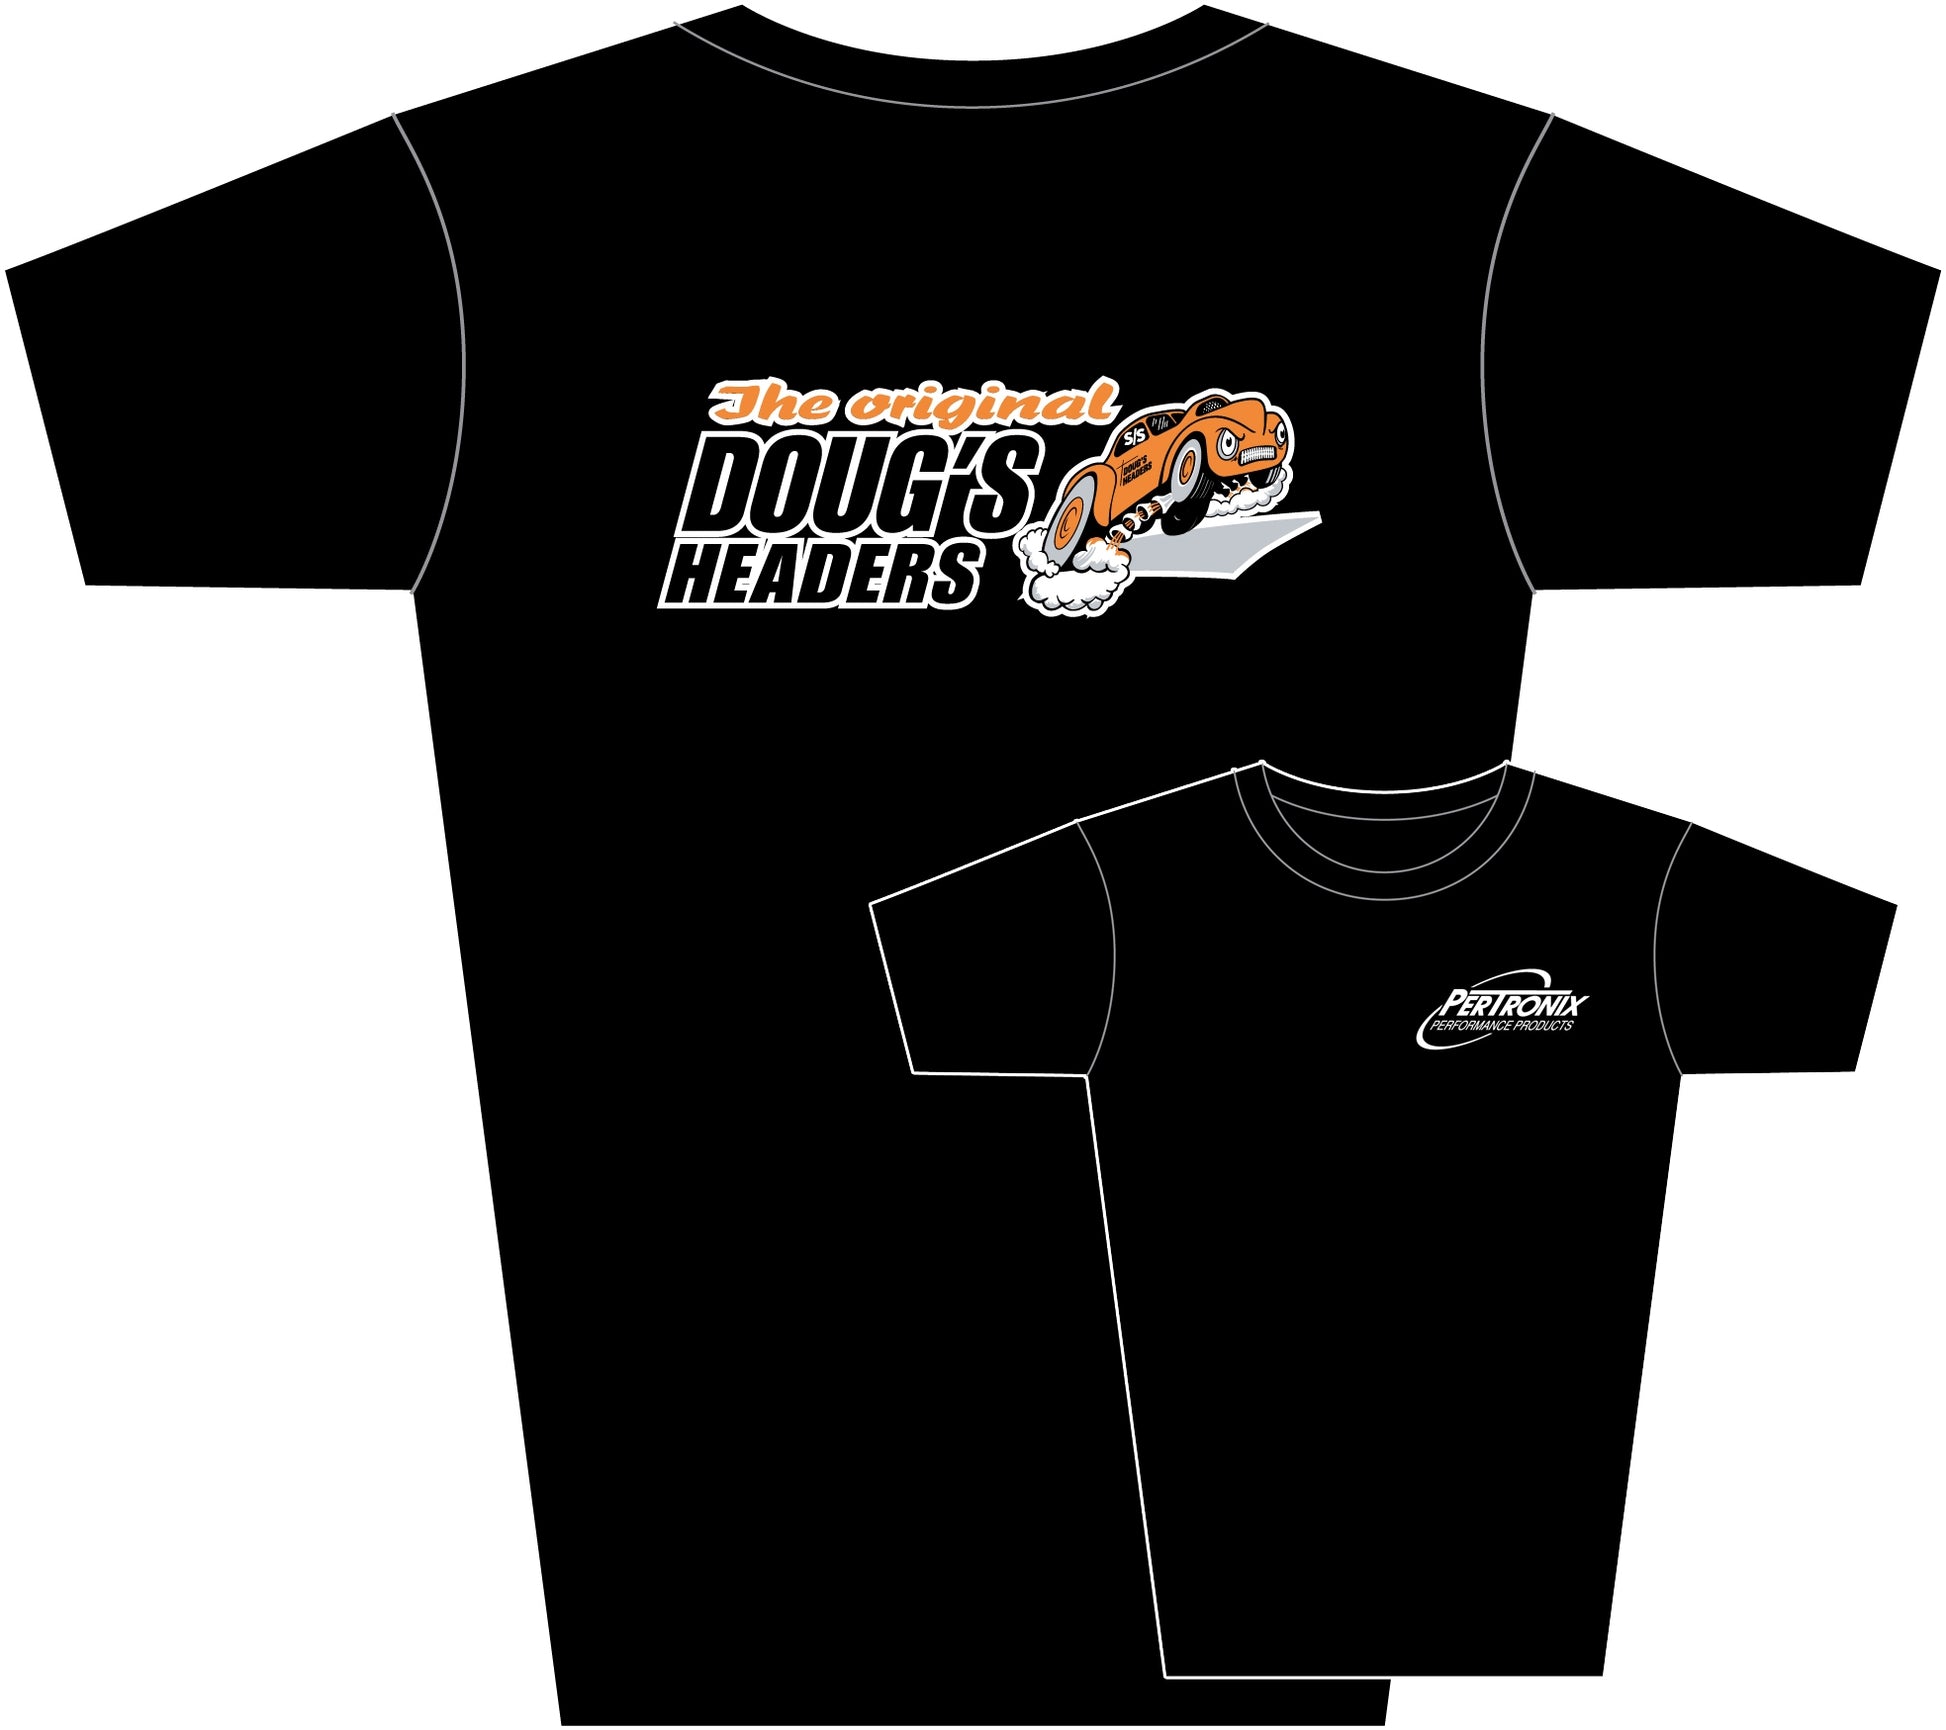 Doug's Headers TS203 Tee Shirt Black XL